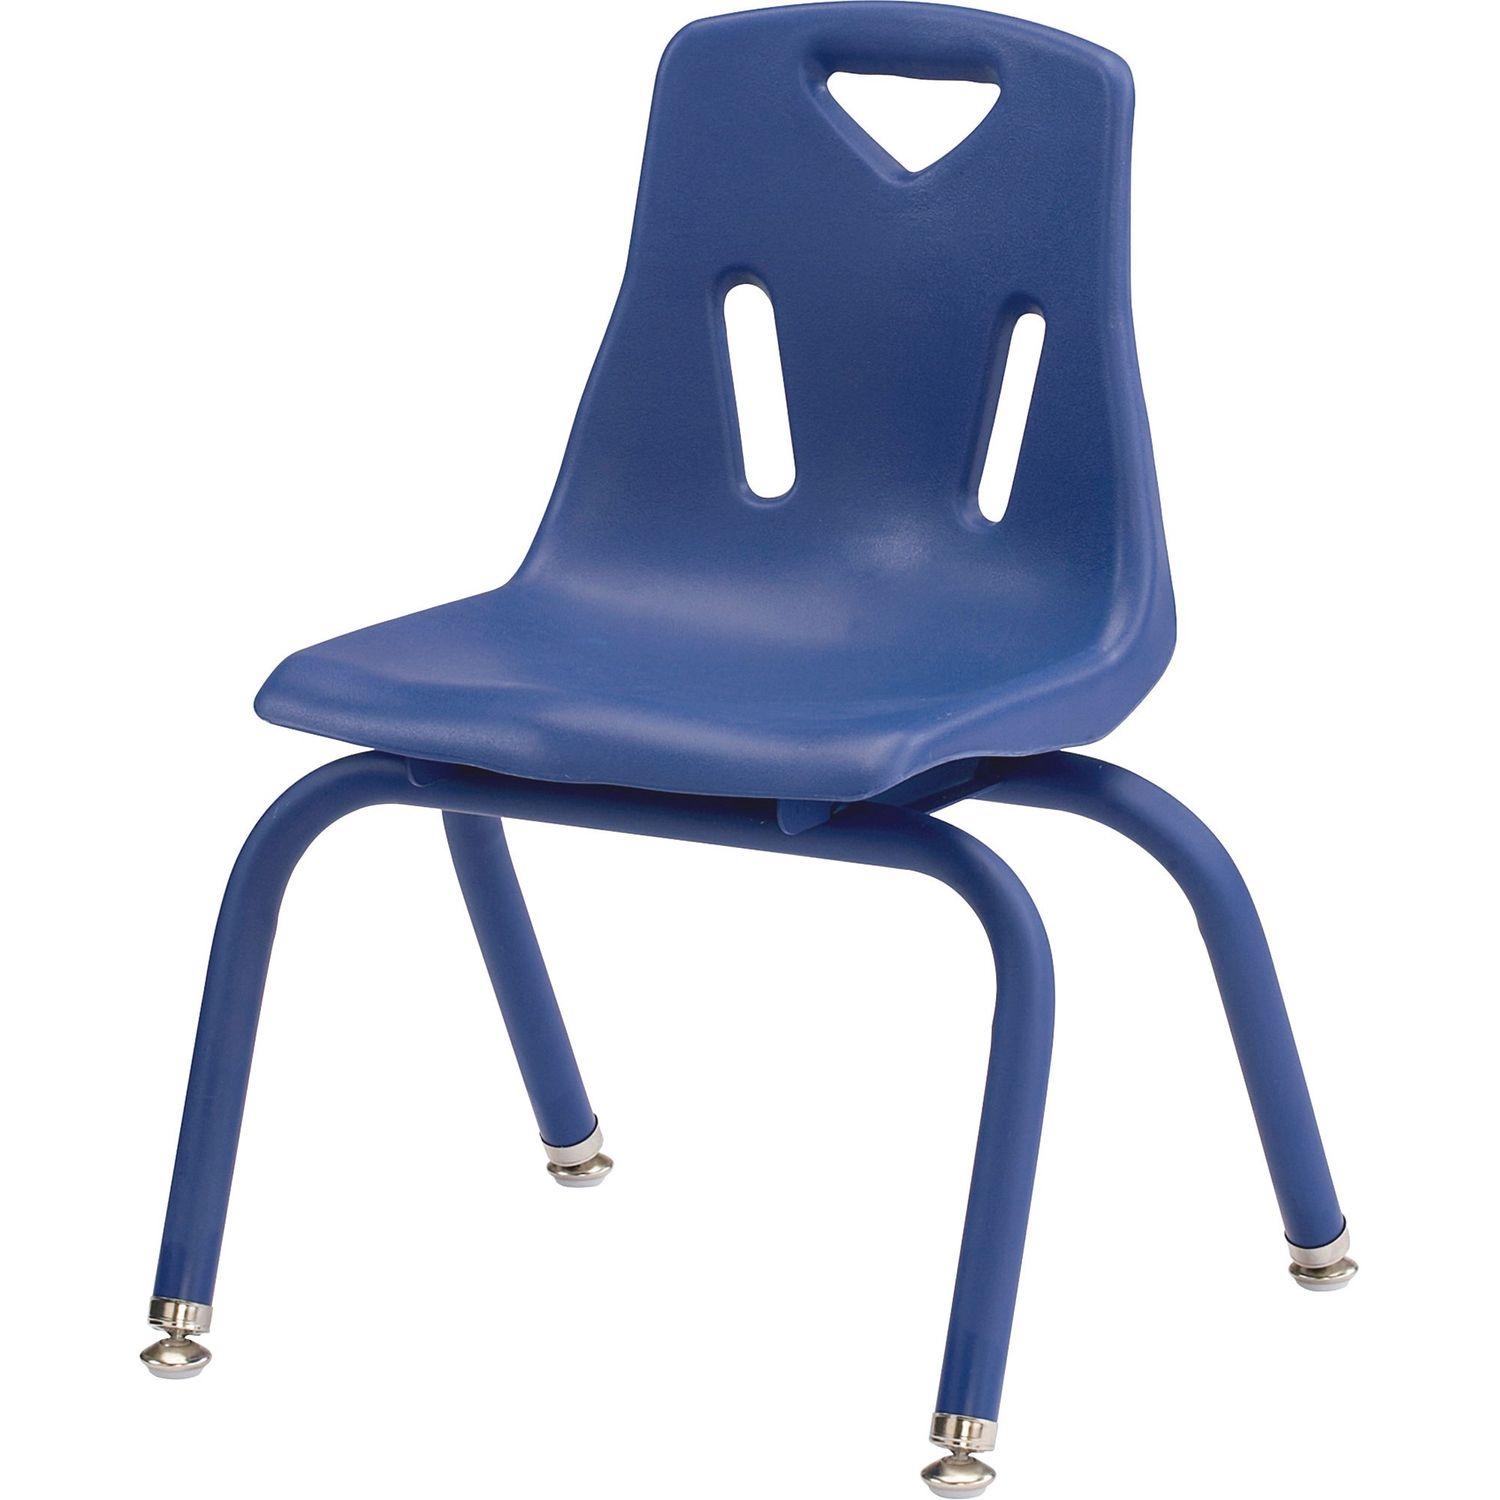 Berries Plastic Chair with Powder Coated Legs Steel Frame, Four-legged Base, Blue, Polypropylene, 1 Each